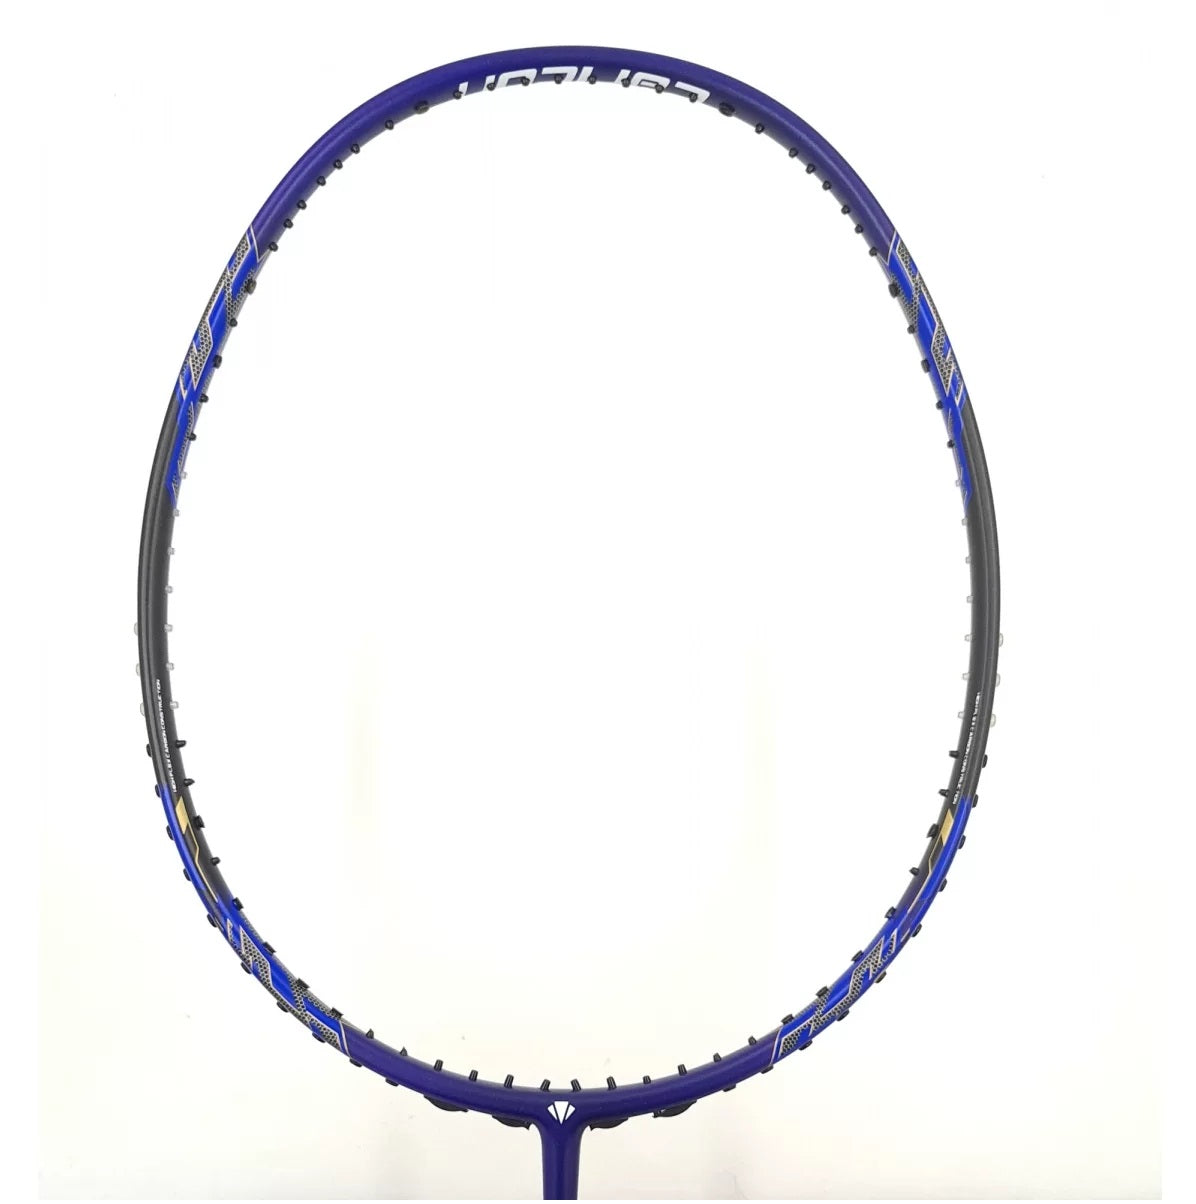 Carlton Carbotec 3200 Strung Badminton Racket